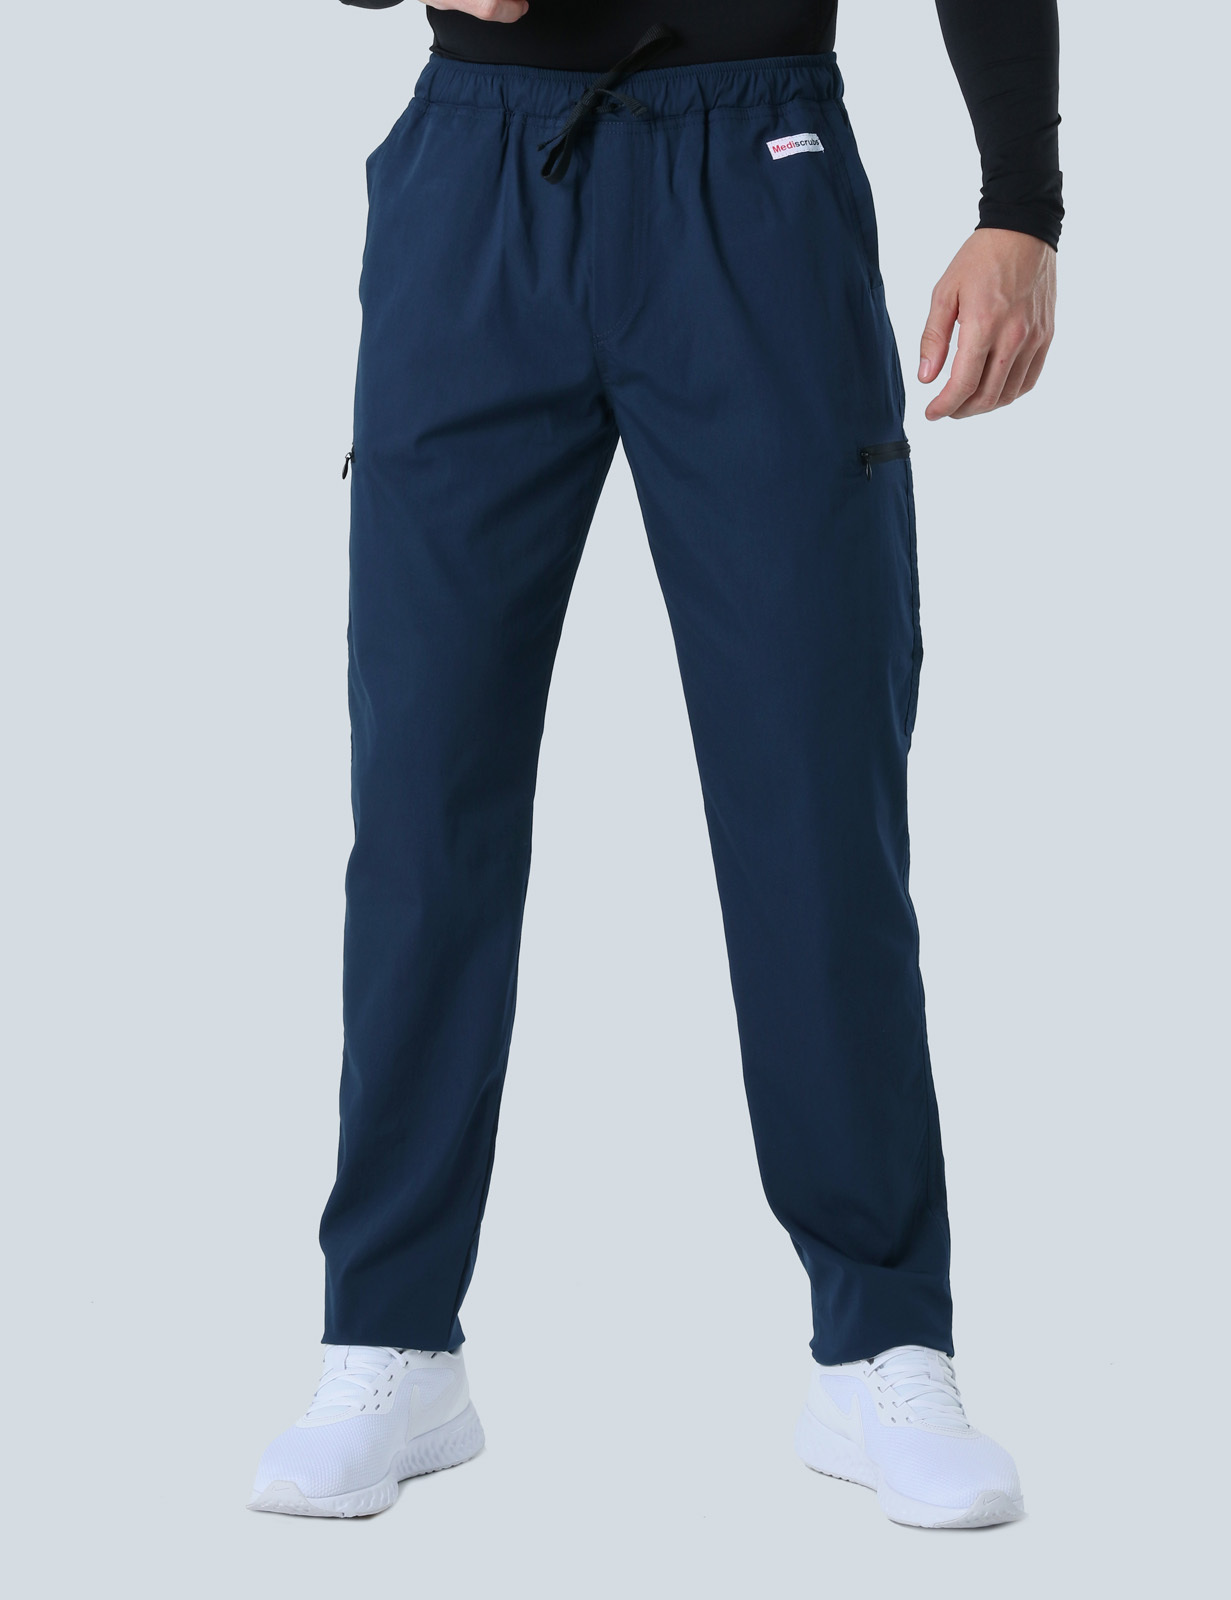 Men's Utility Pants - Navy - X Small